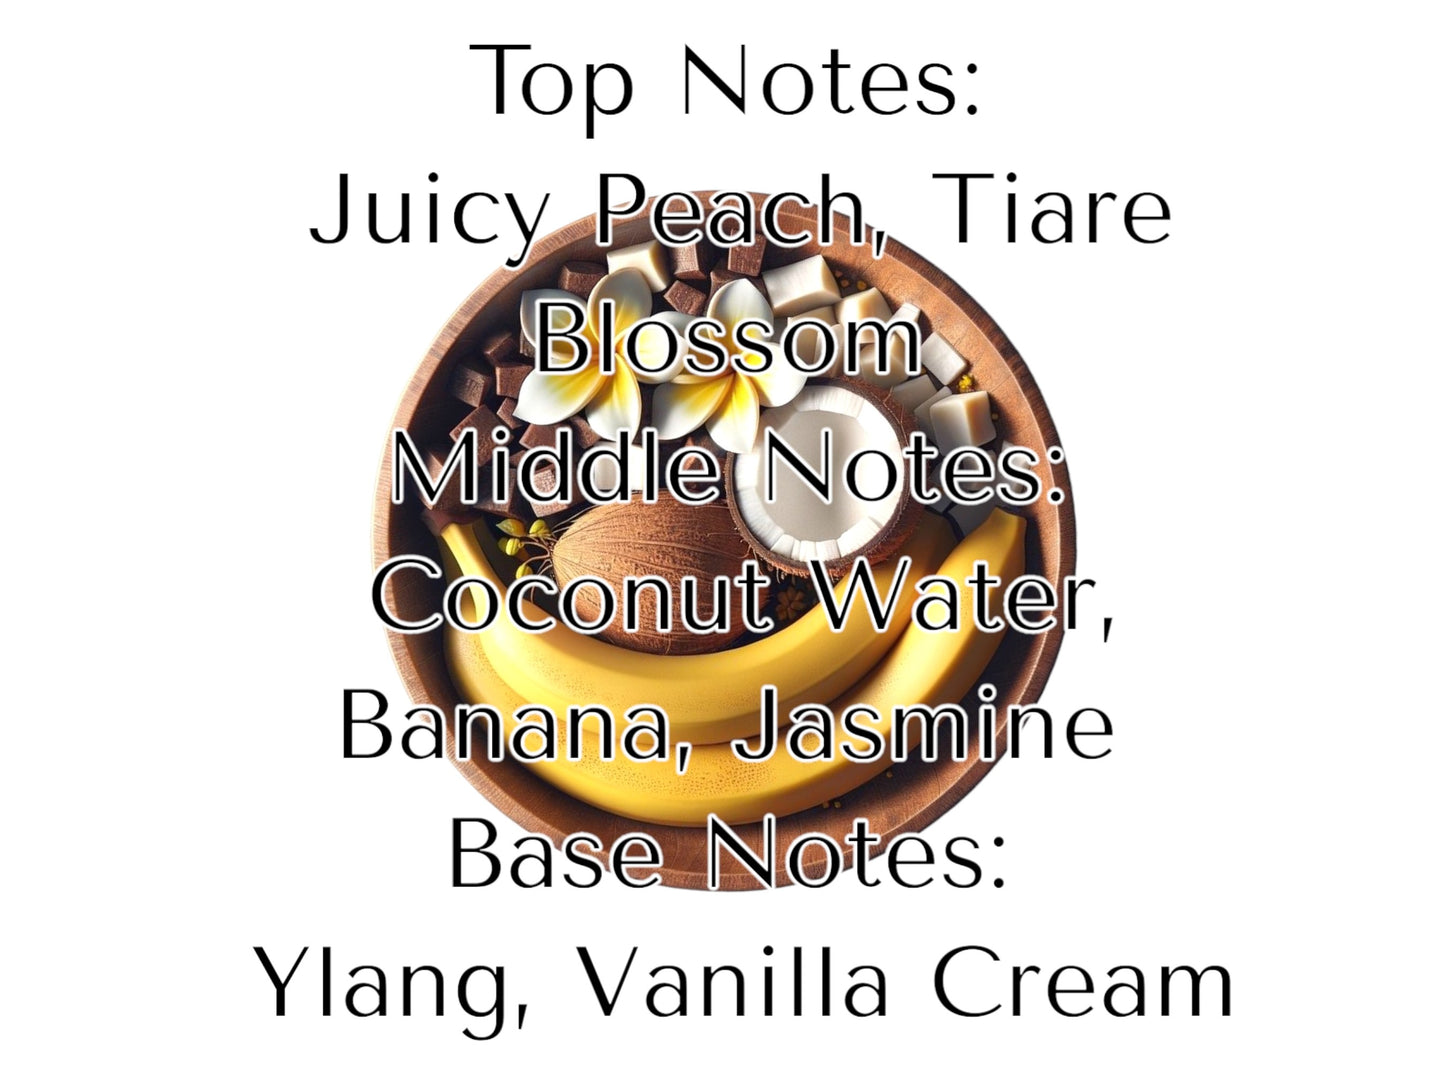 Banana Blossom & Coconut Water Eau de Parfum